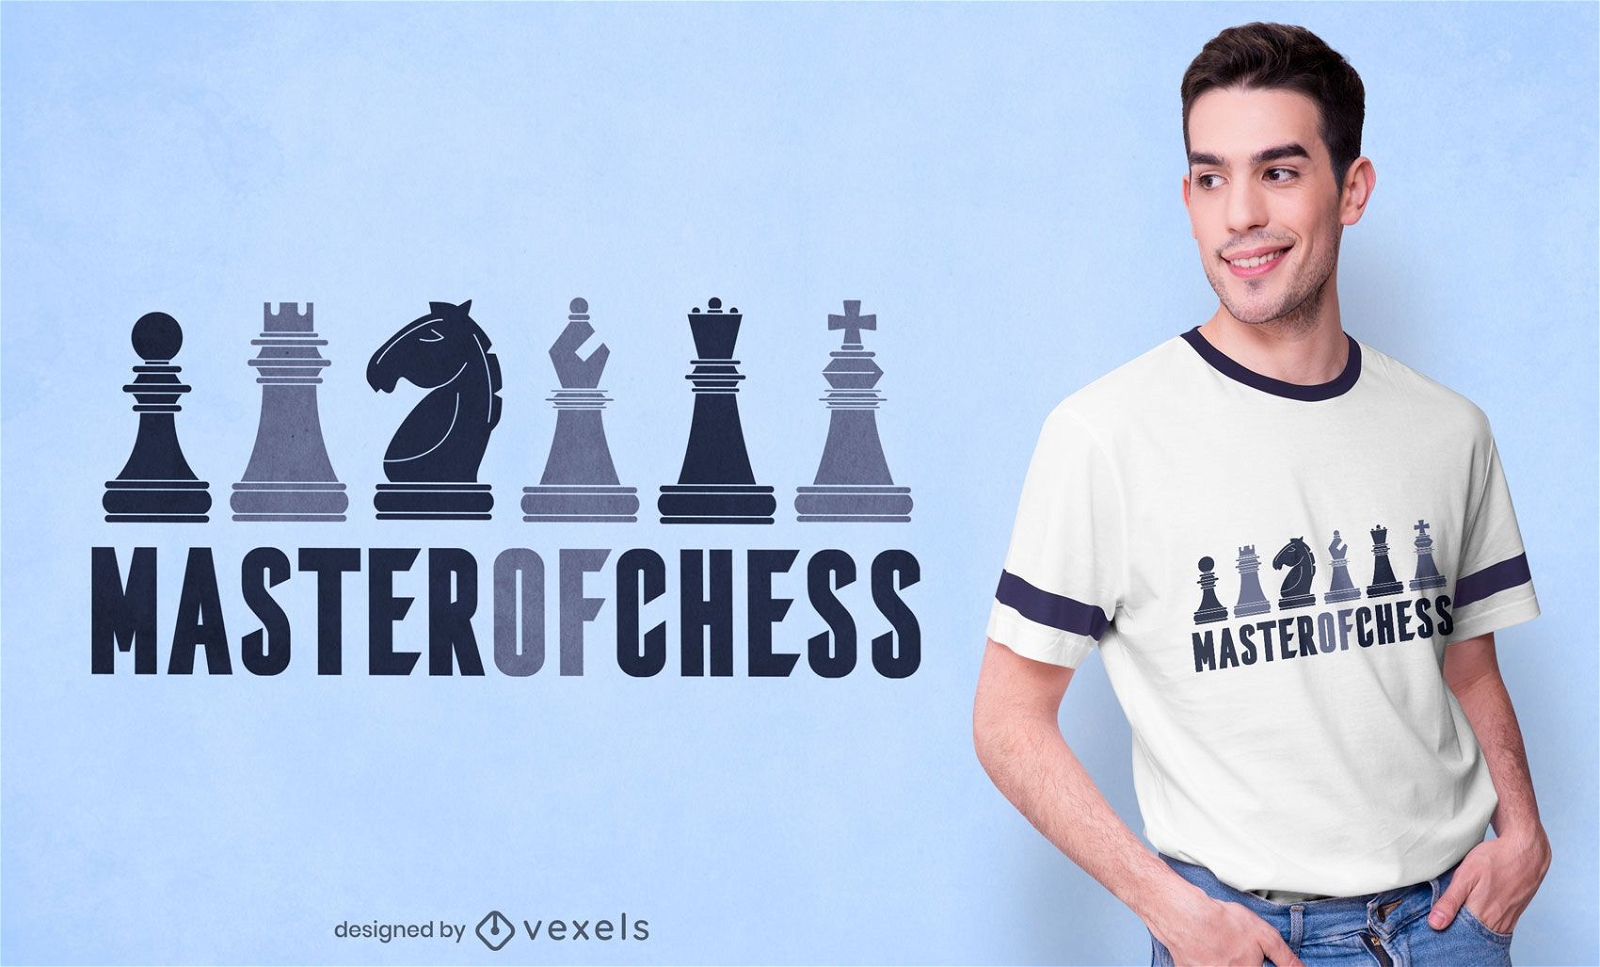 Master of chess t-shirt design